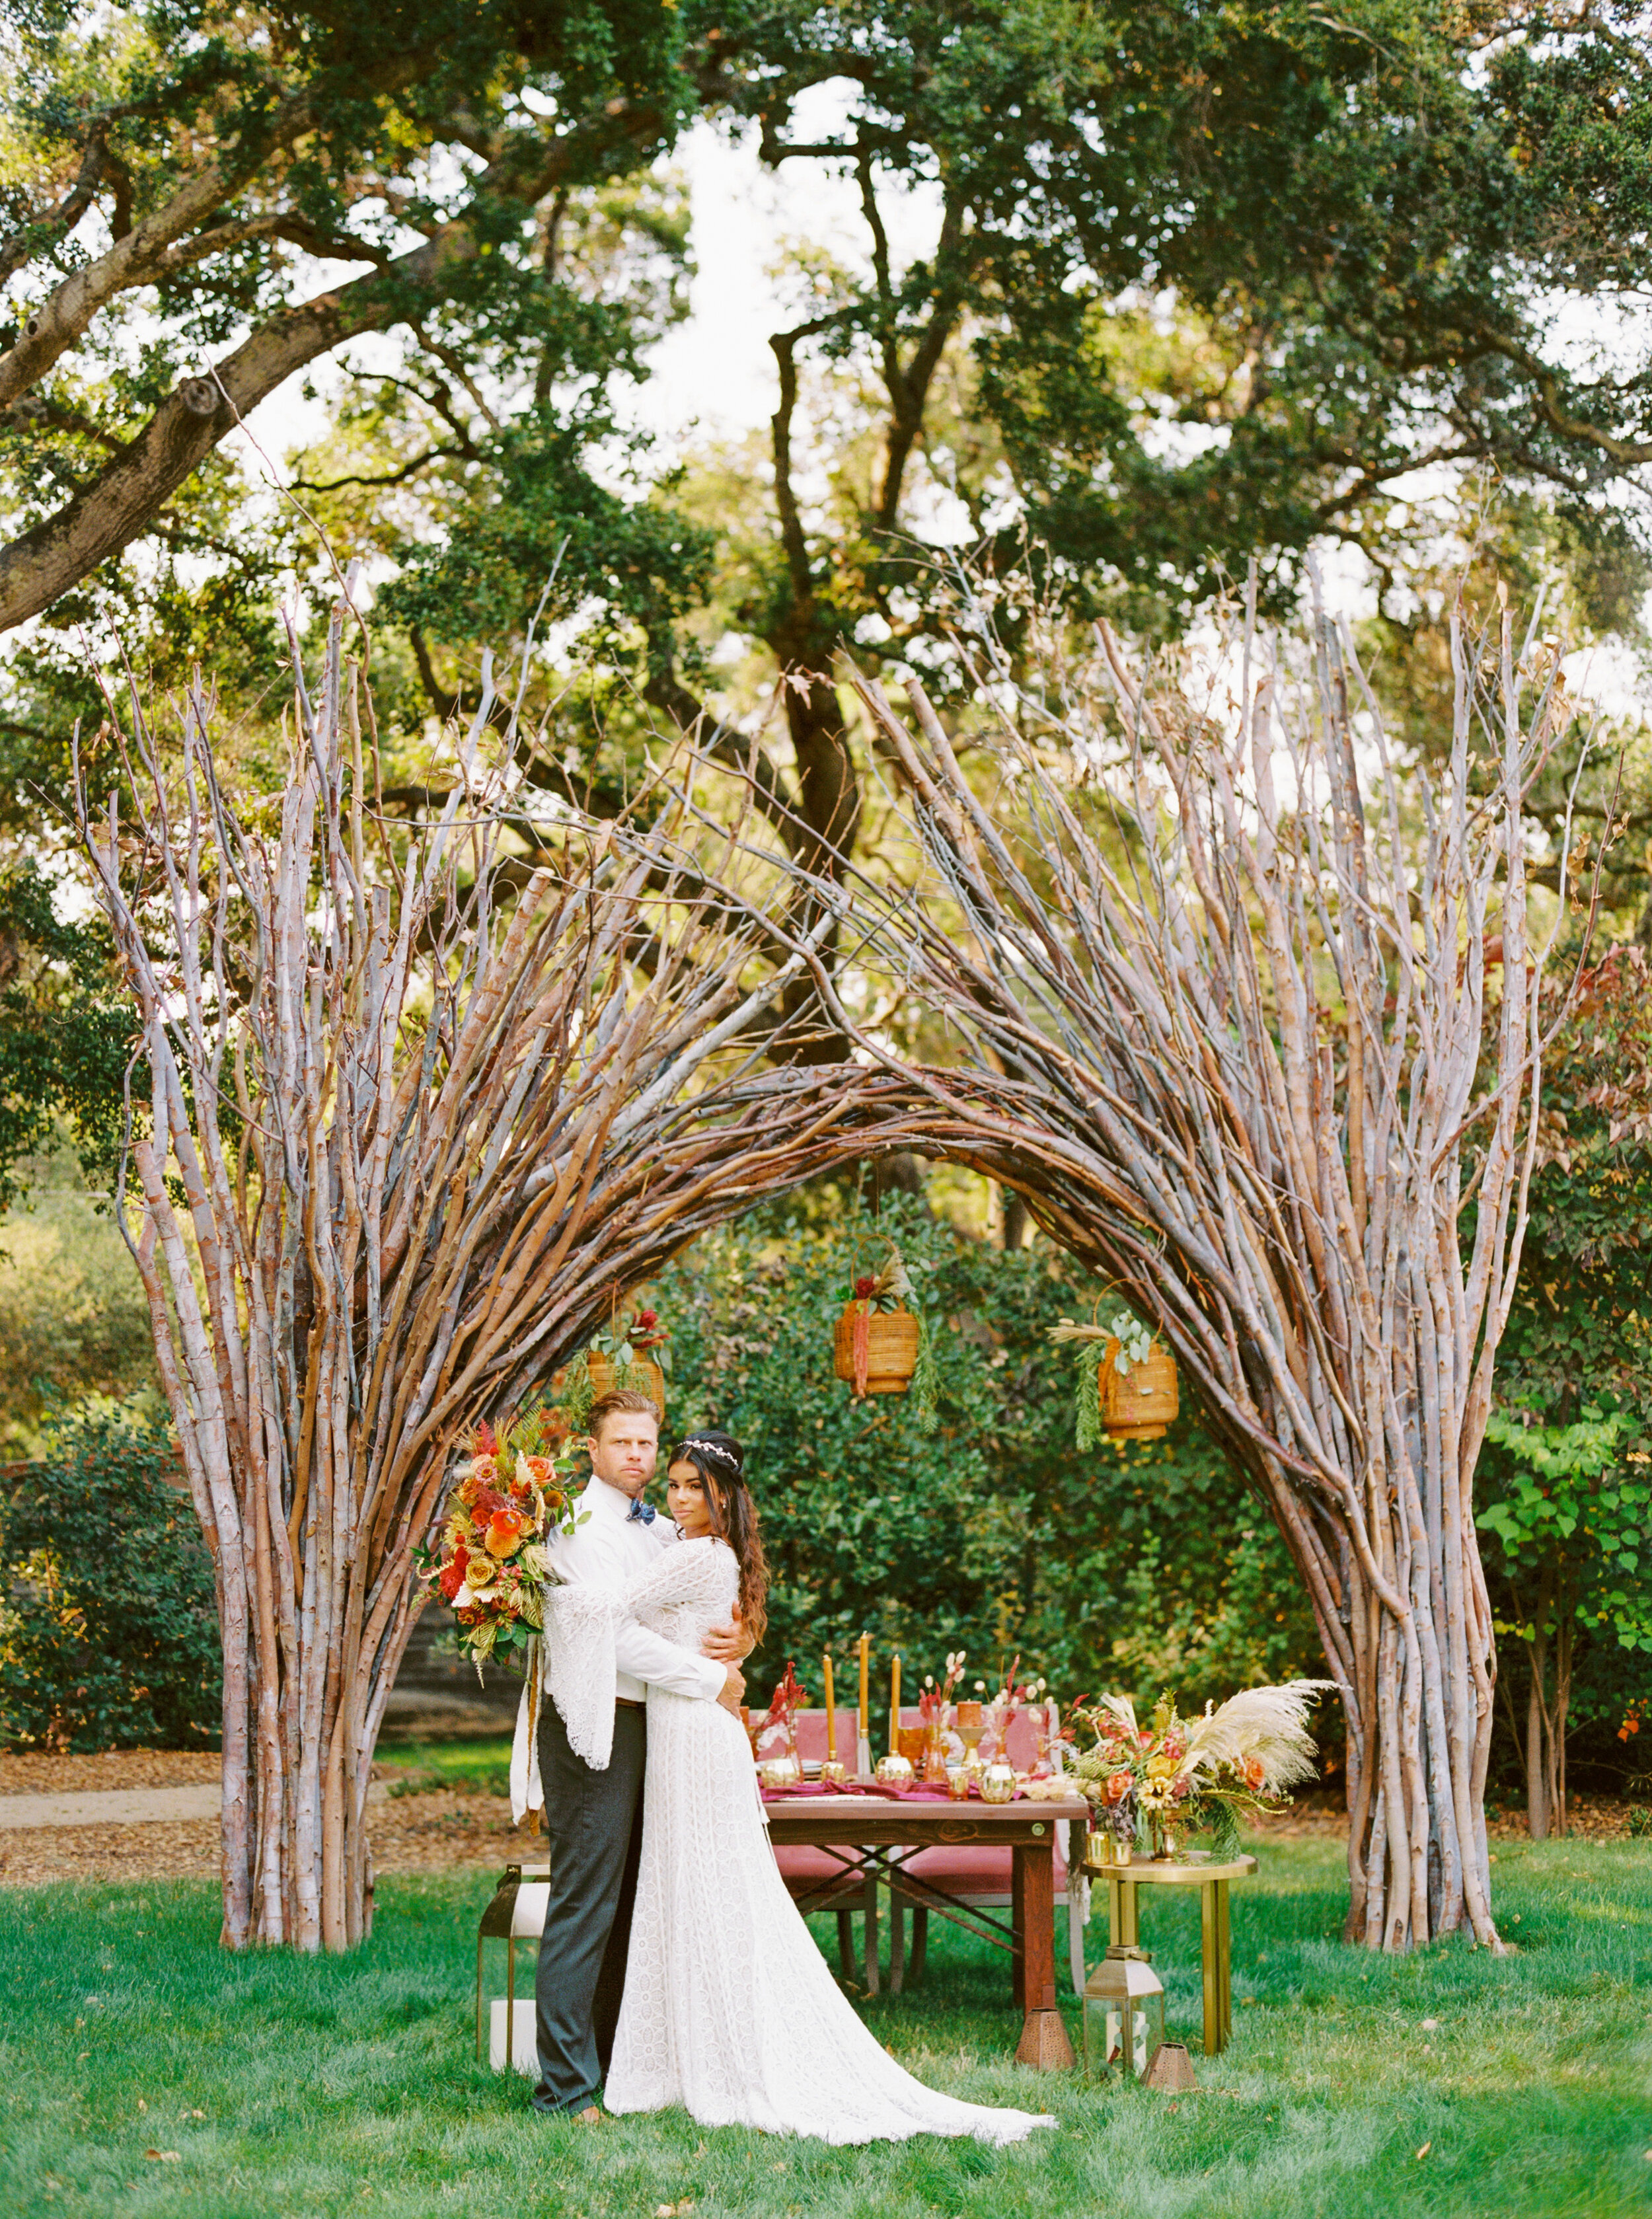 Sarahi Hadden - An Earthy Summer Boho Inspired Wedding with Sunset Hues at Gardener Ranch-65.jpg